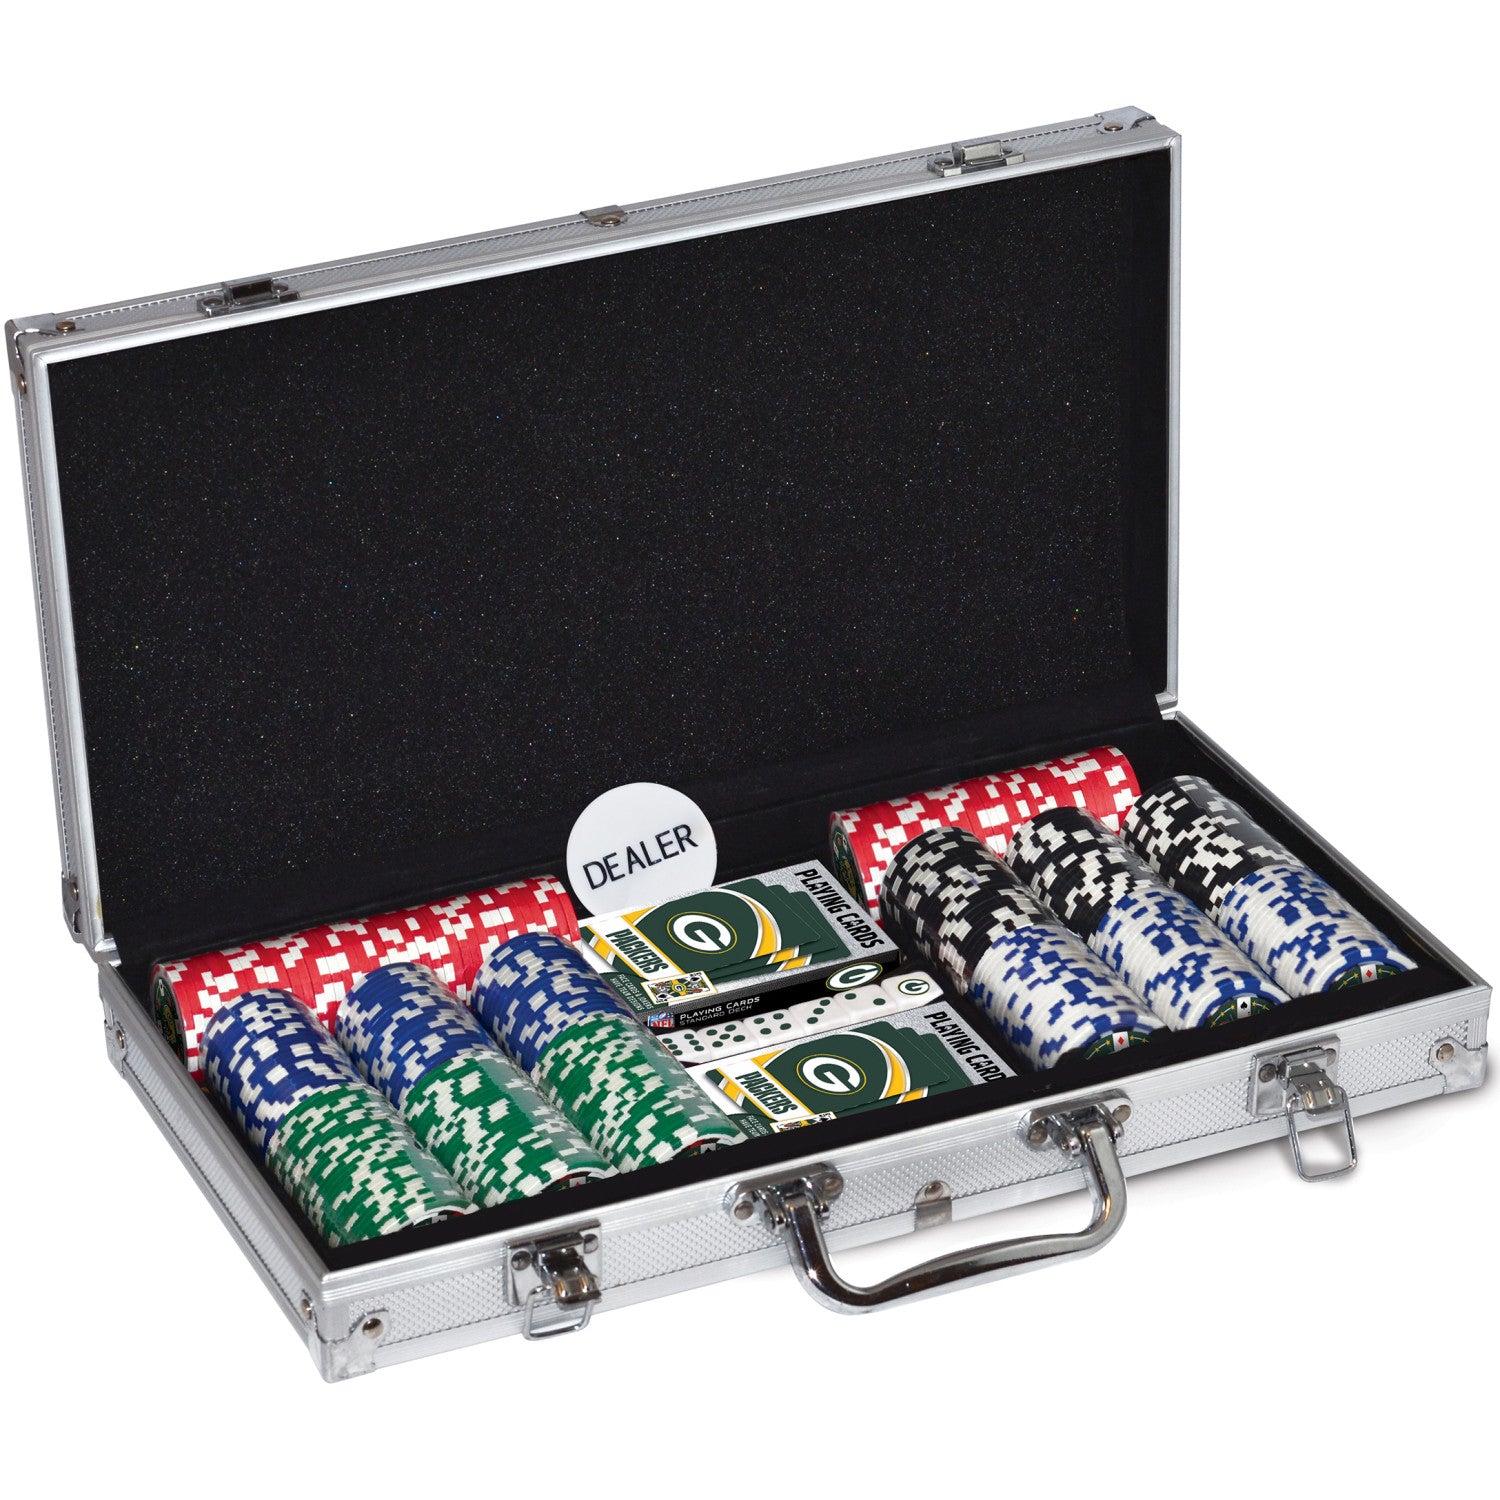 Green Bay Packers Casino Style 300 Piece Poker Set